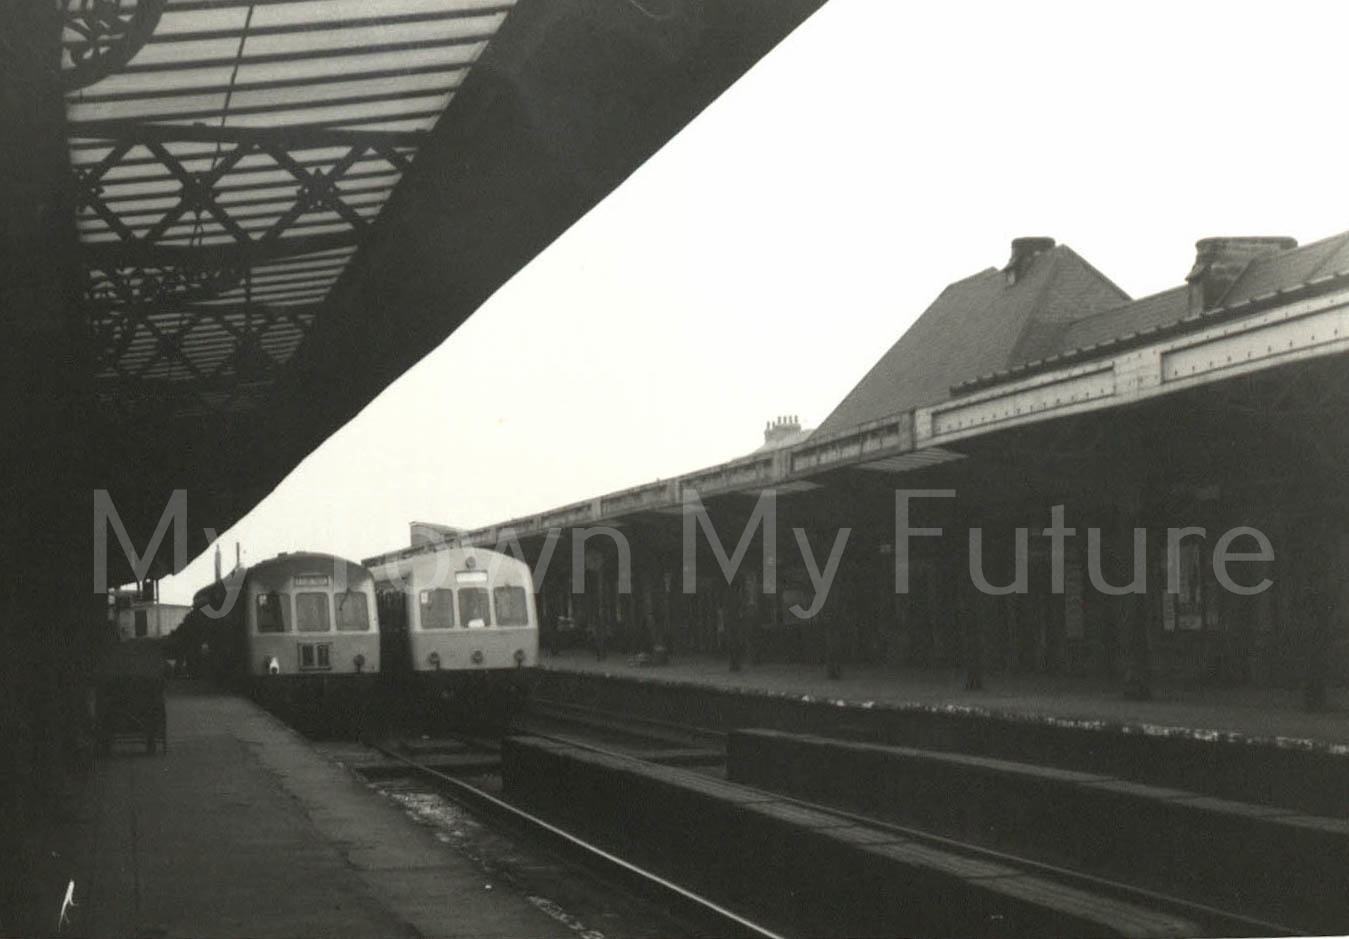 Middlesbrough Railway Station (1970)